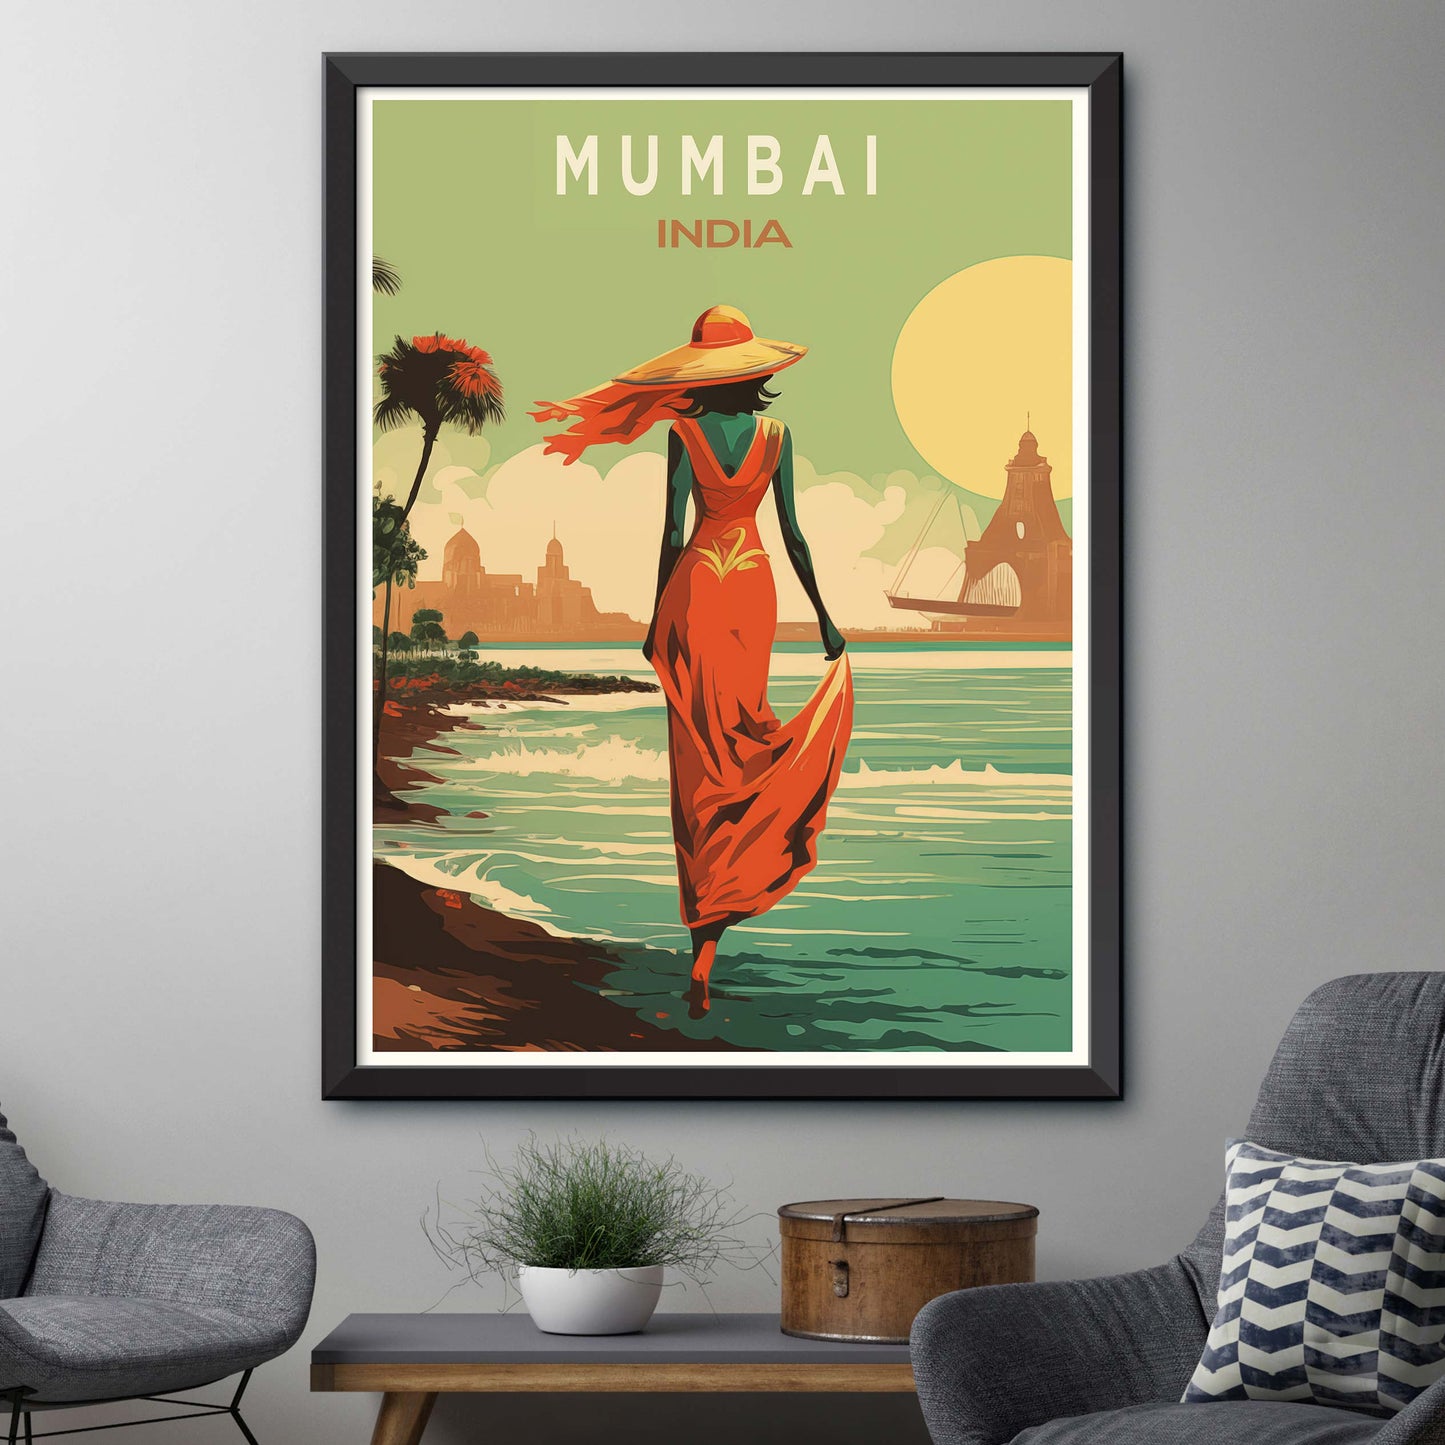 Mumbai India Vintage Travel Posters